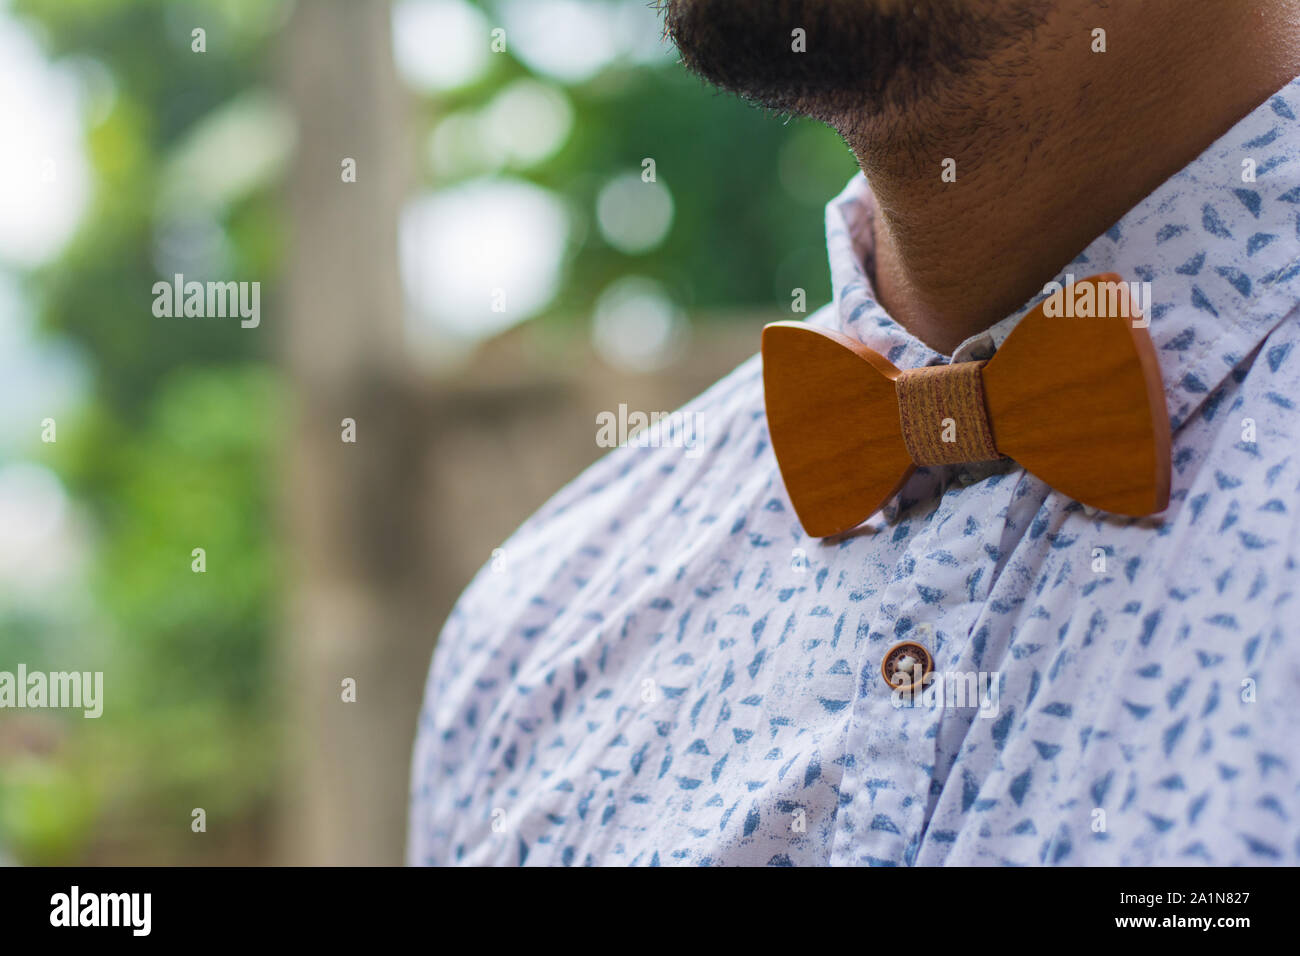 New wood bow tie designs Stock Photo